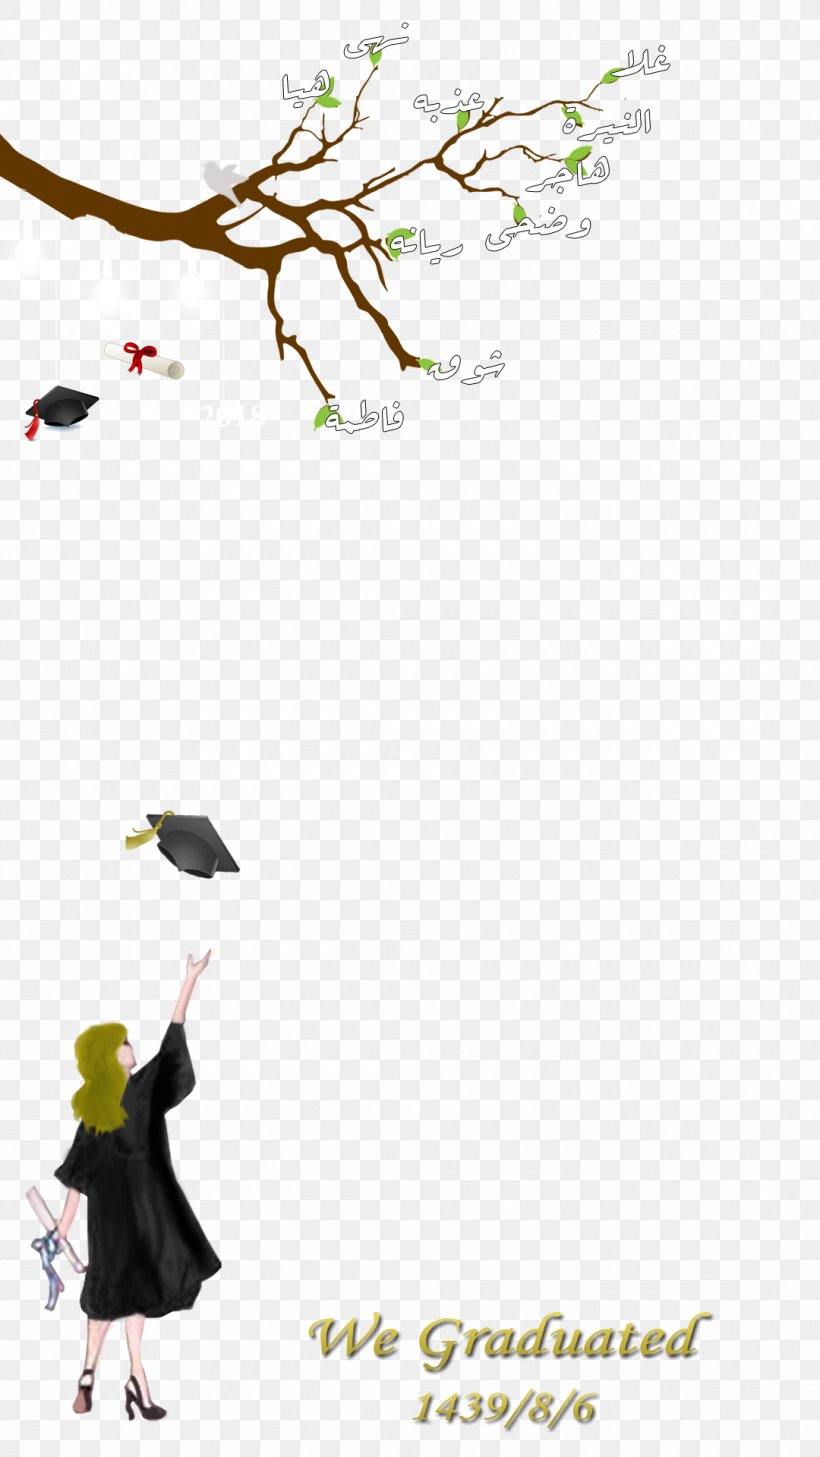 Congratulation Graduation Wallpaper Hd , HD Wallpaper & Backgrounds